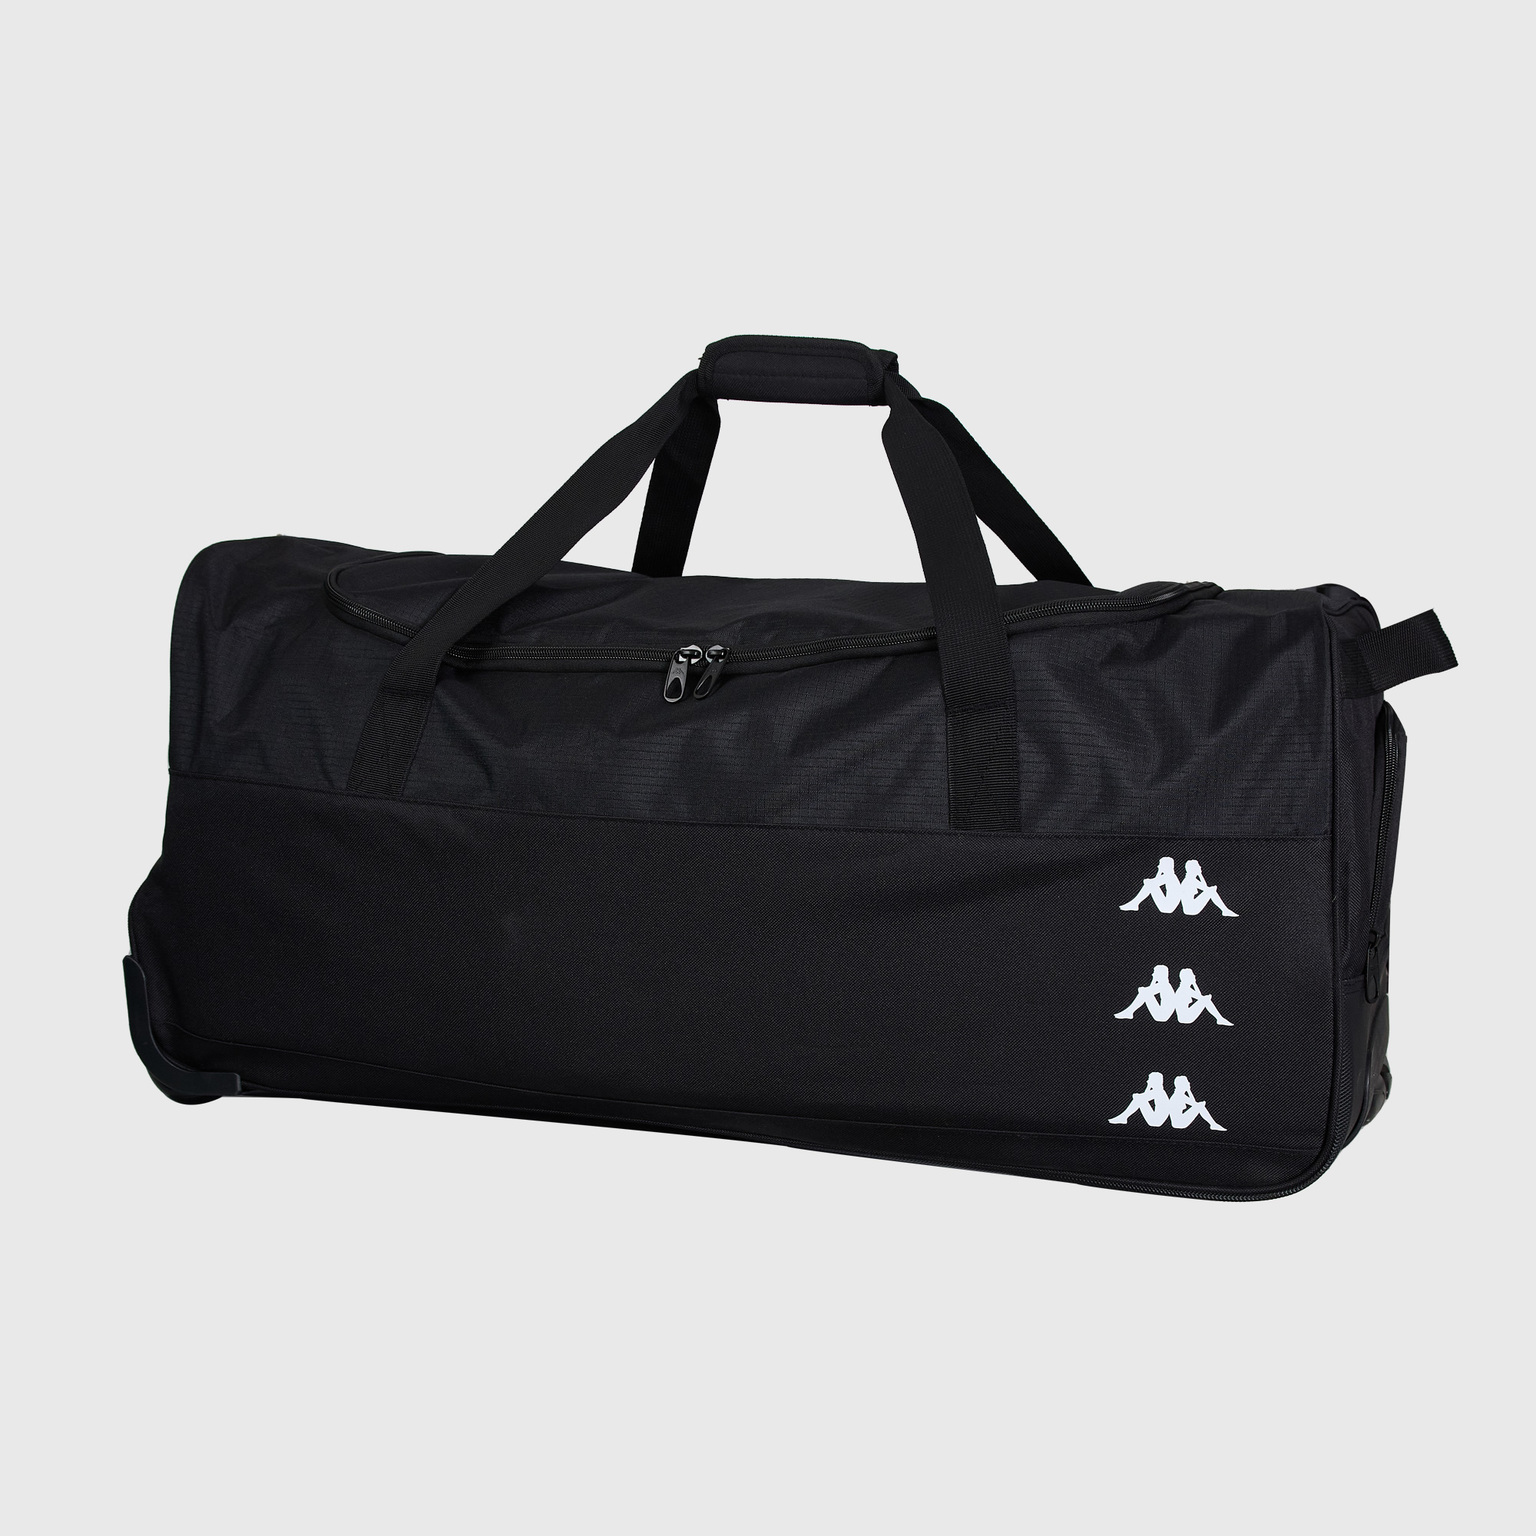 Сумка Kappa Grenno Travel Bag 321M88W-005